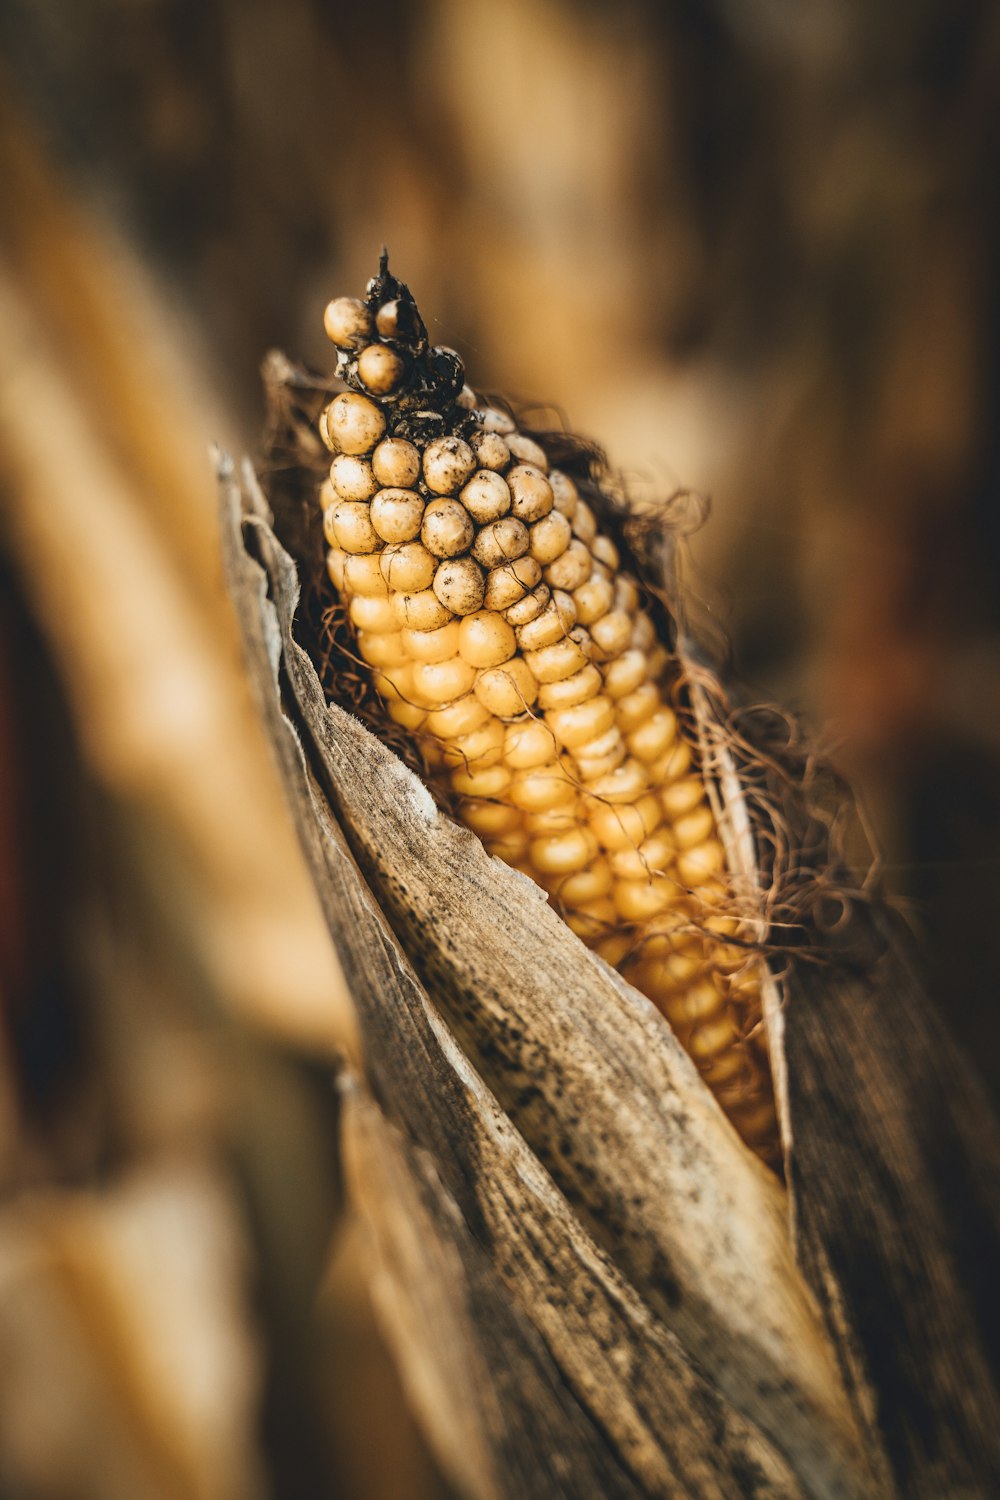 a close up of an ear of corn